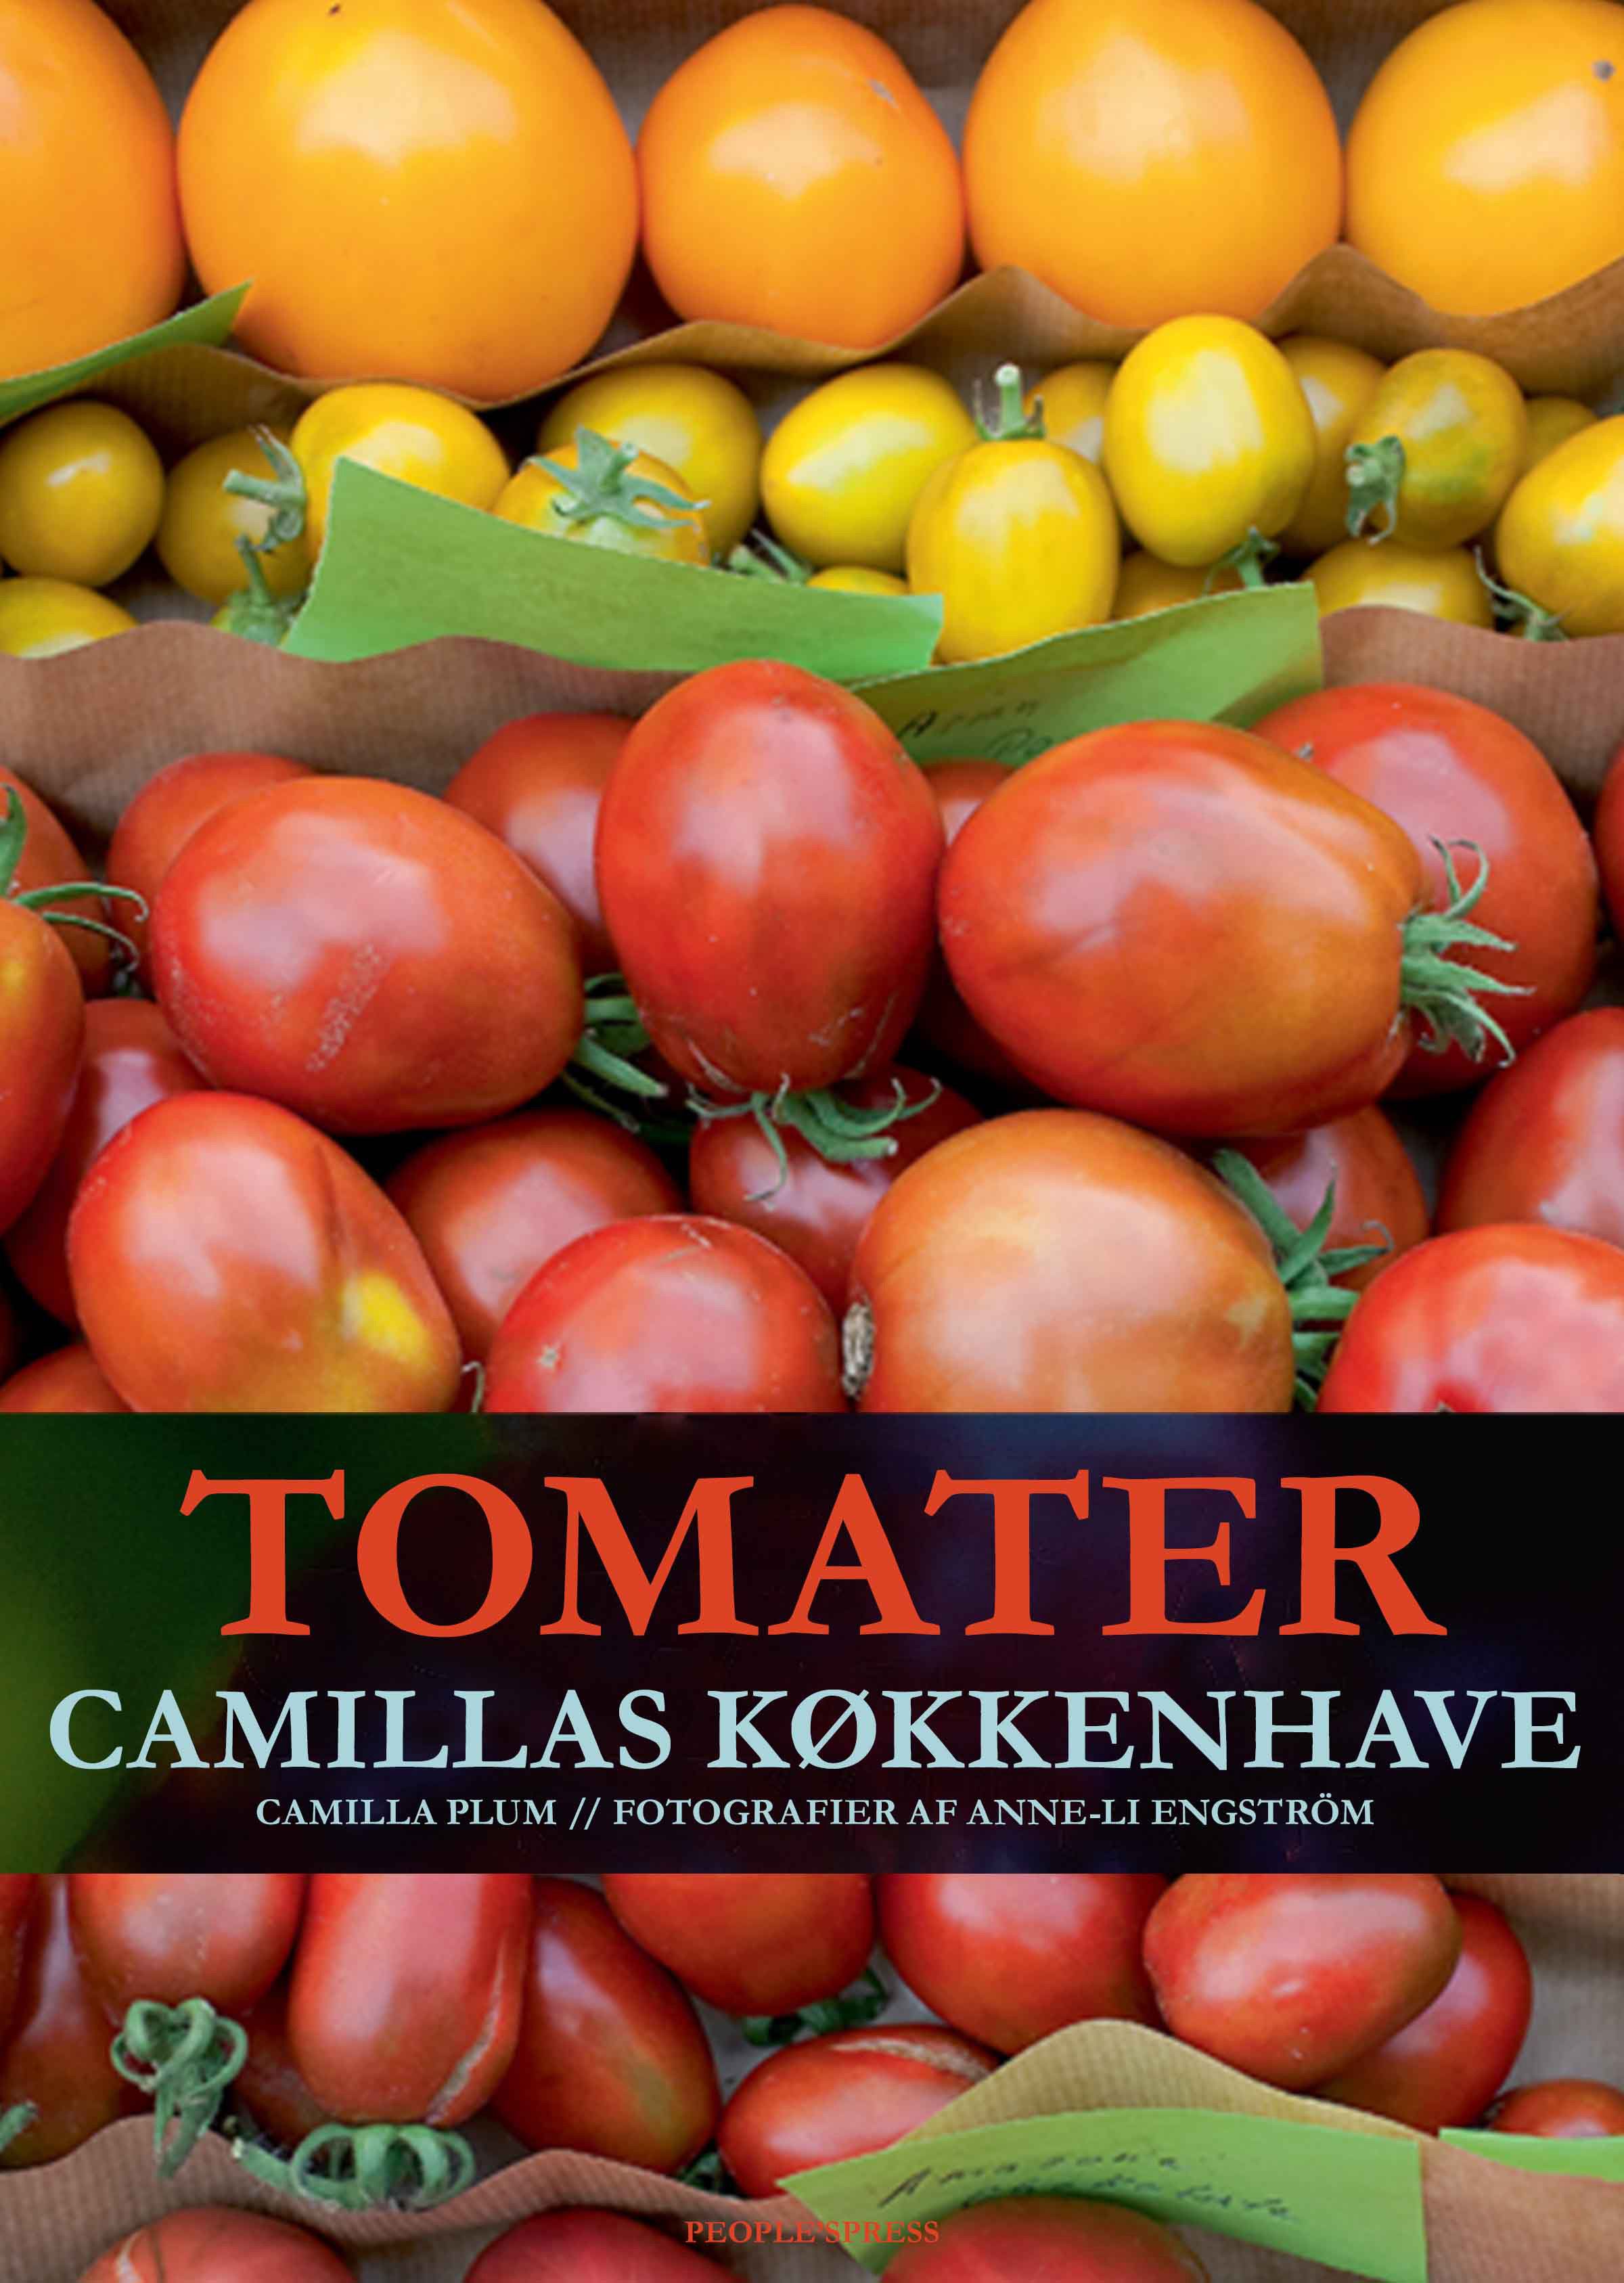 Tomater - Camillas køkkenhave, eBook by Camilla Plum